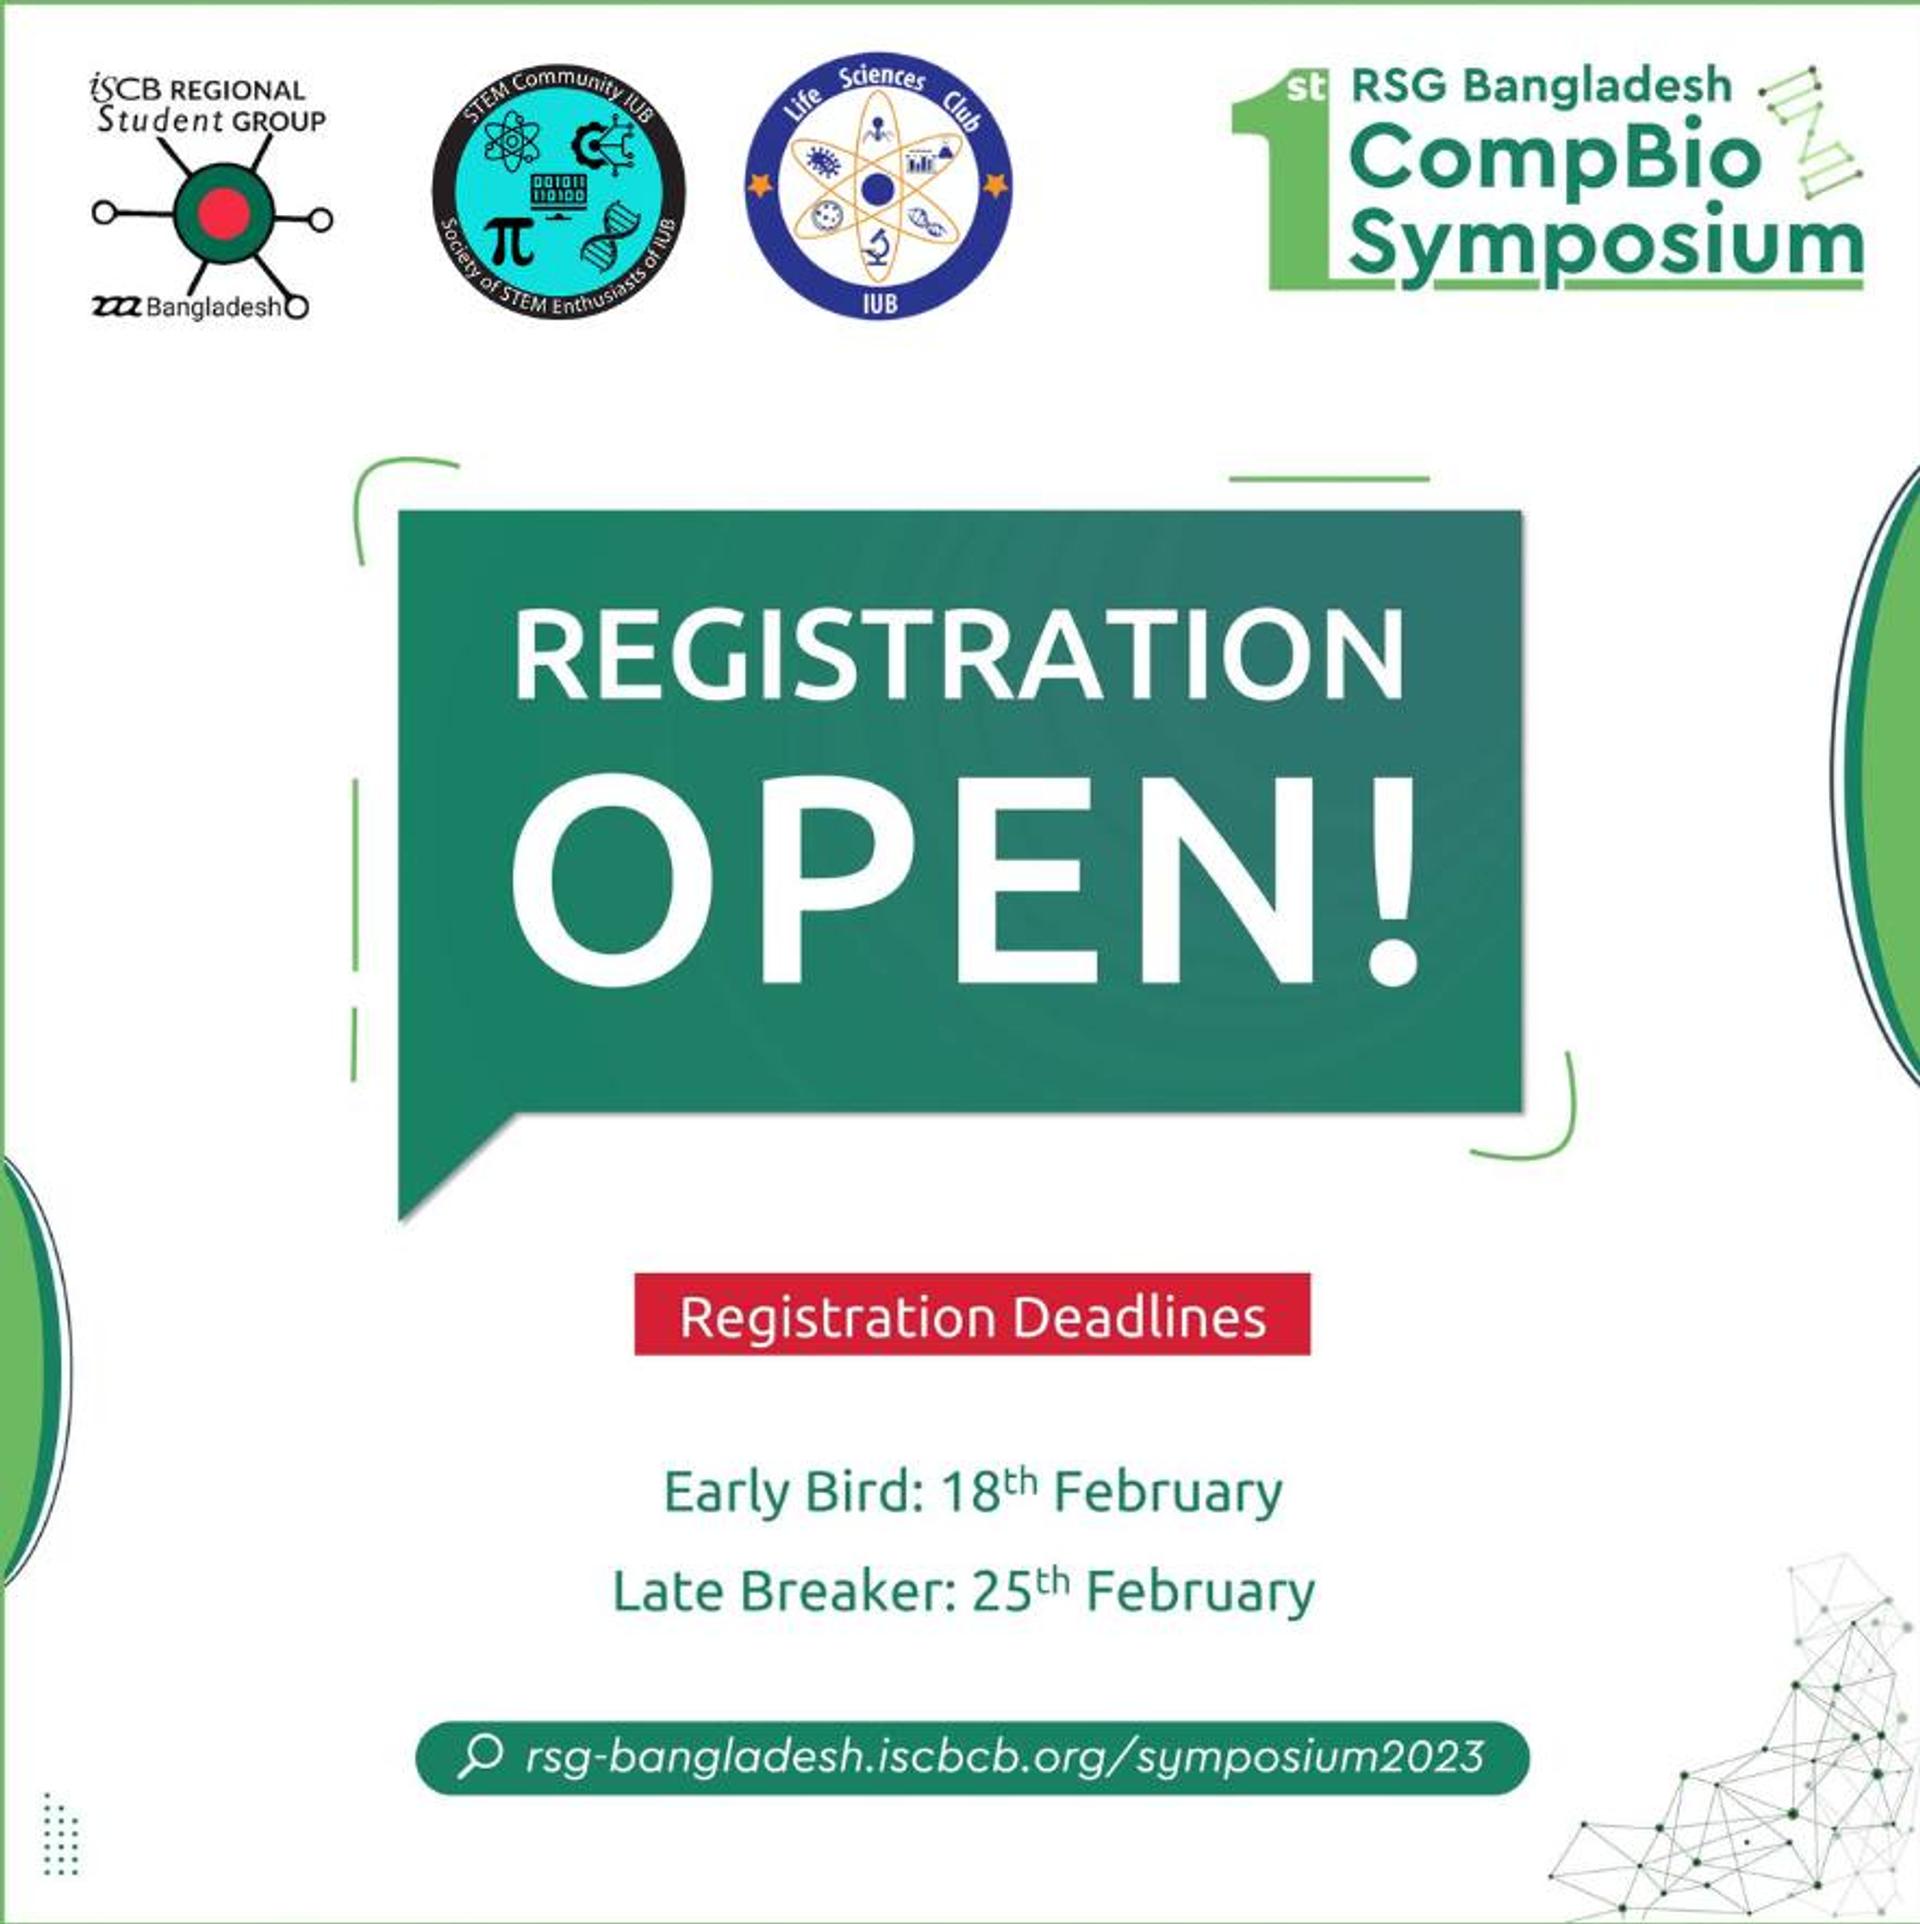 STEMcIUB is the Community Partner for the 1st RSG Bangladesh Computational Biology Symposium